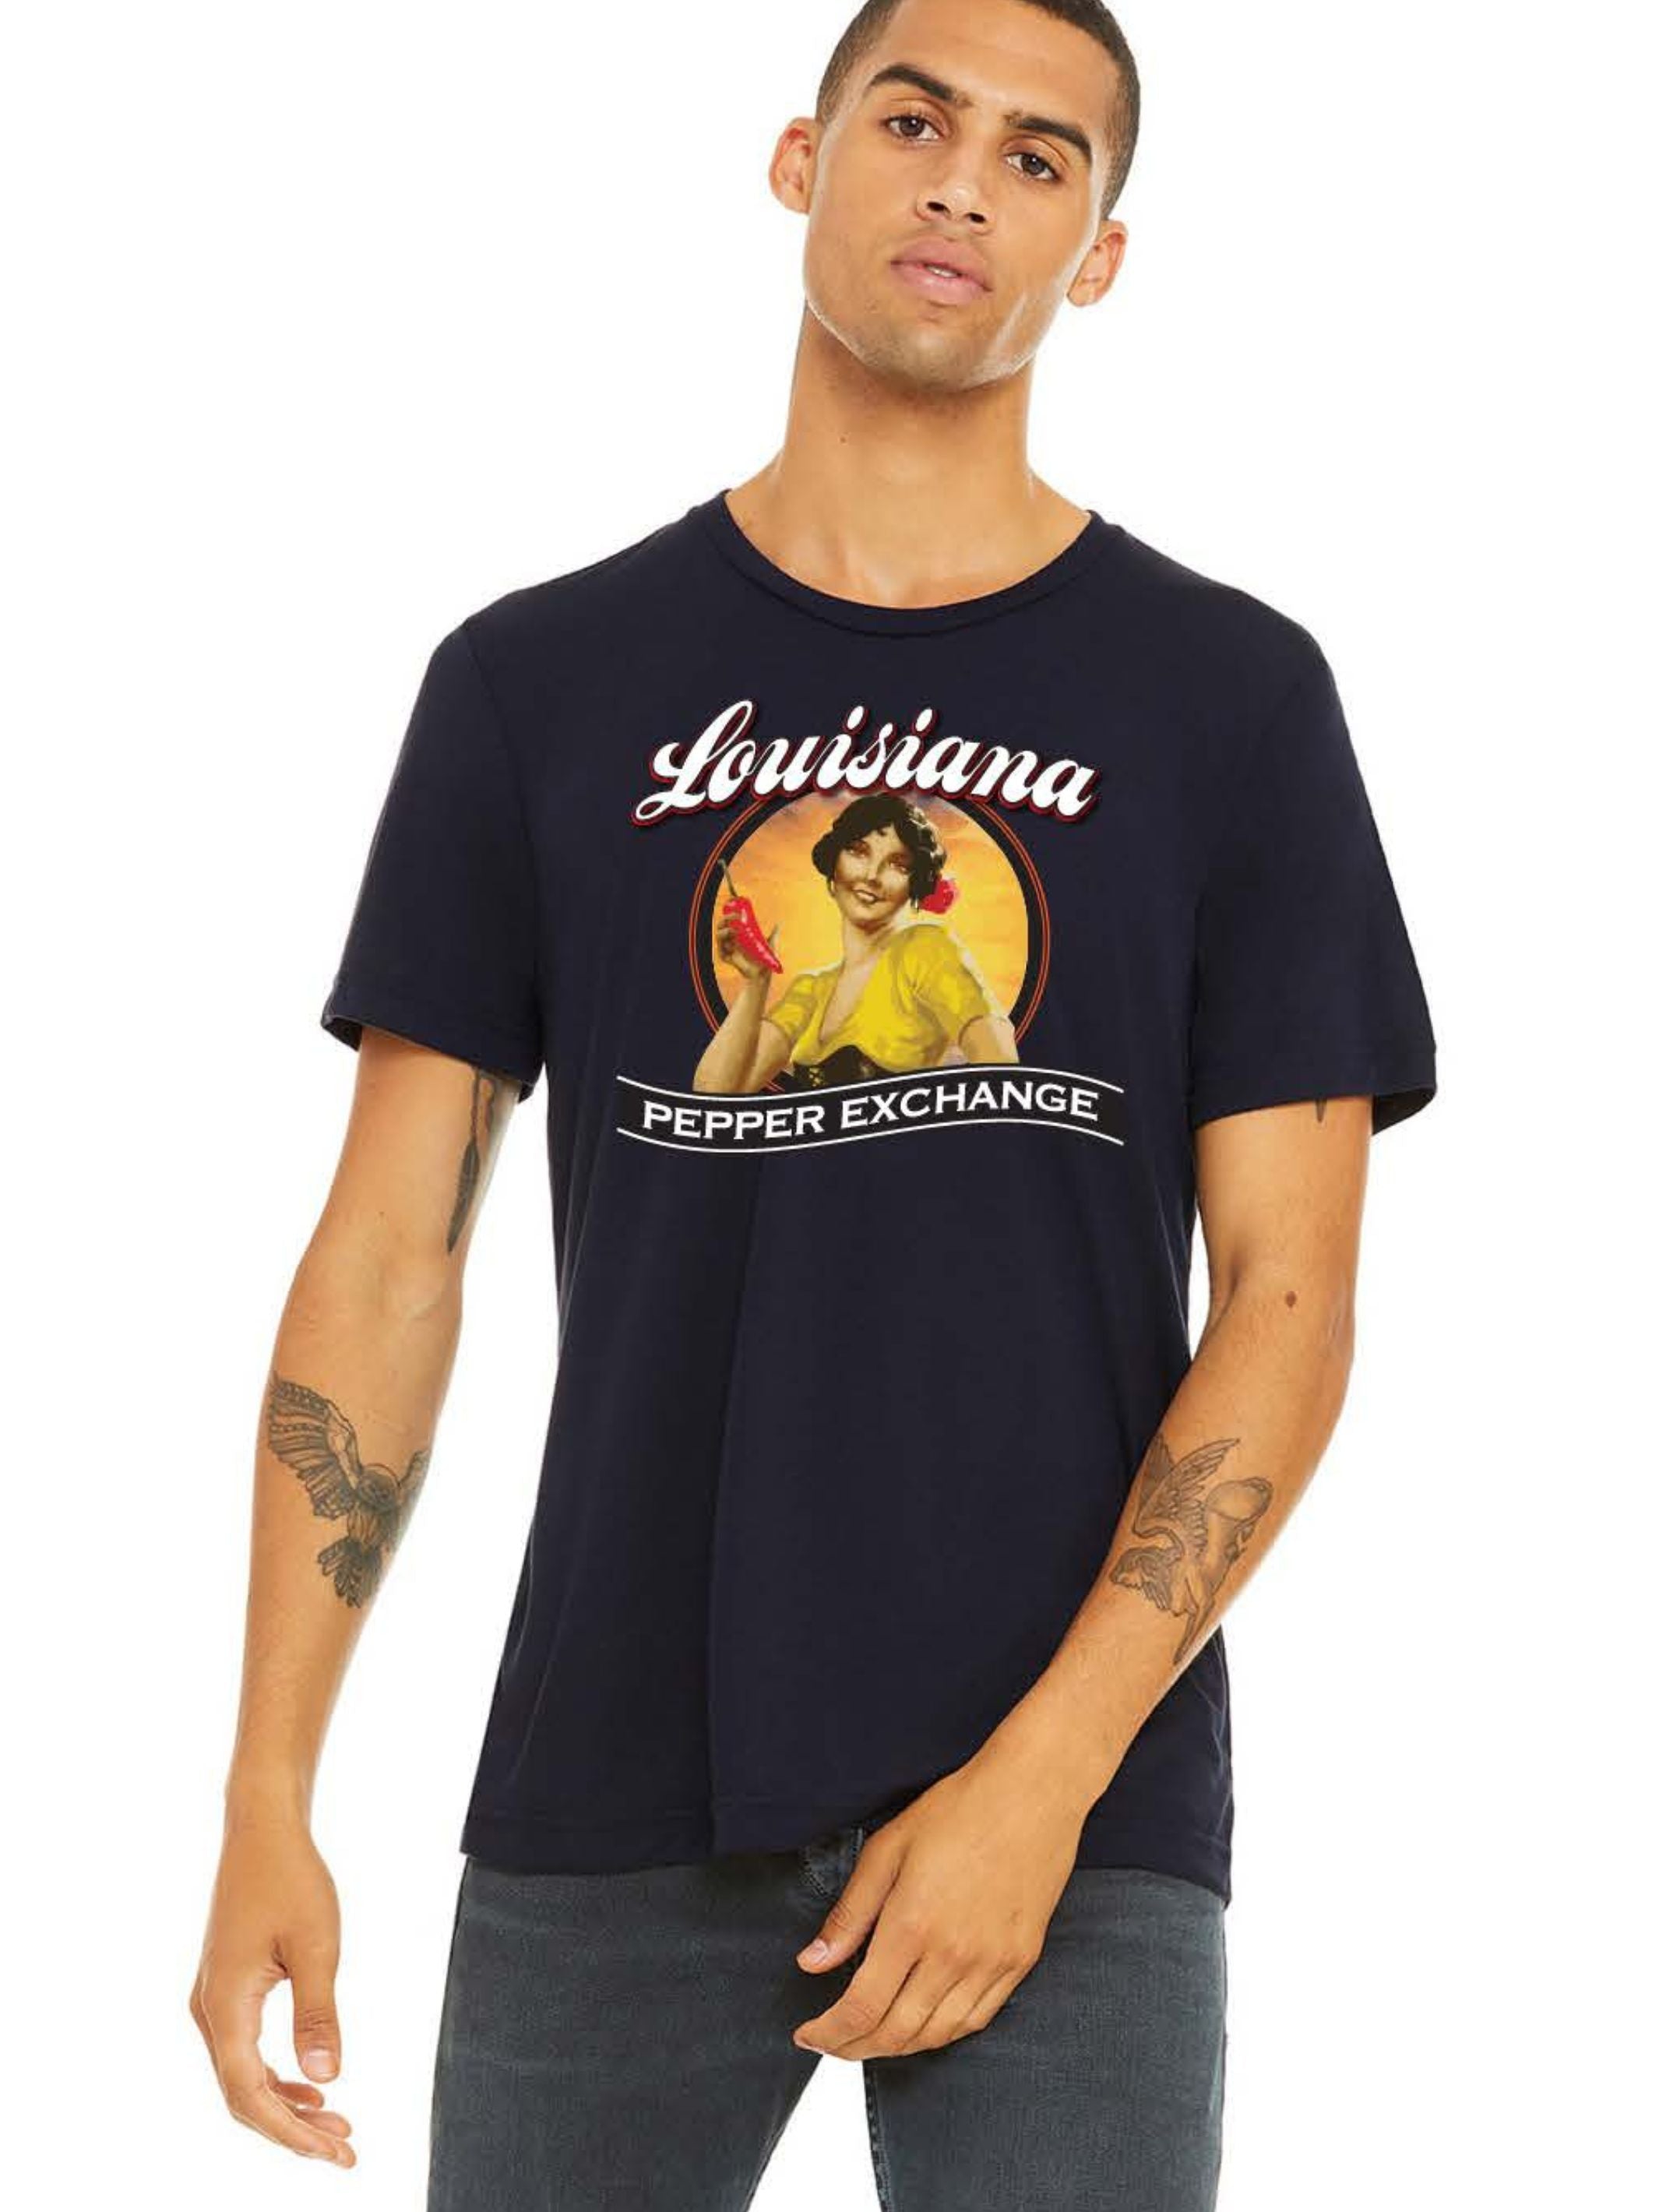 Louisiana HotSauce Tee' Men's T-Shirt